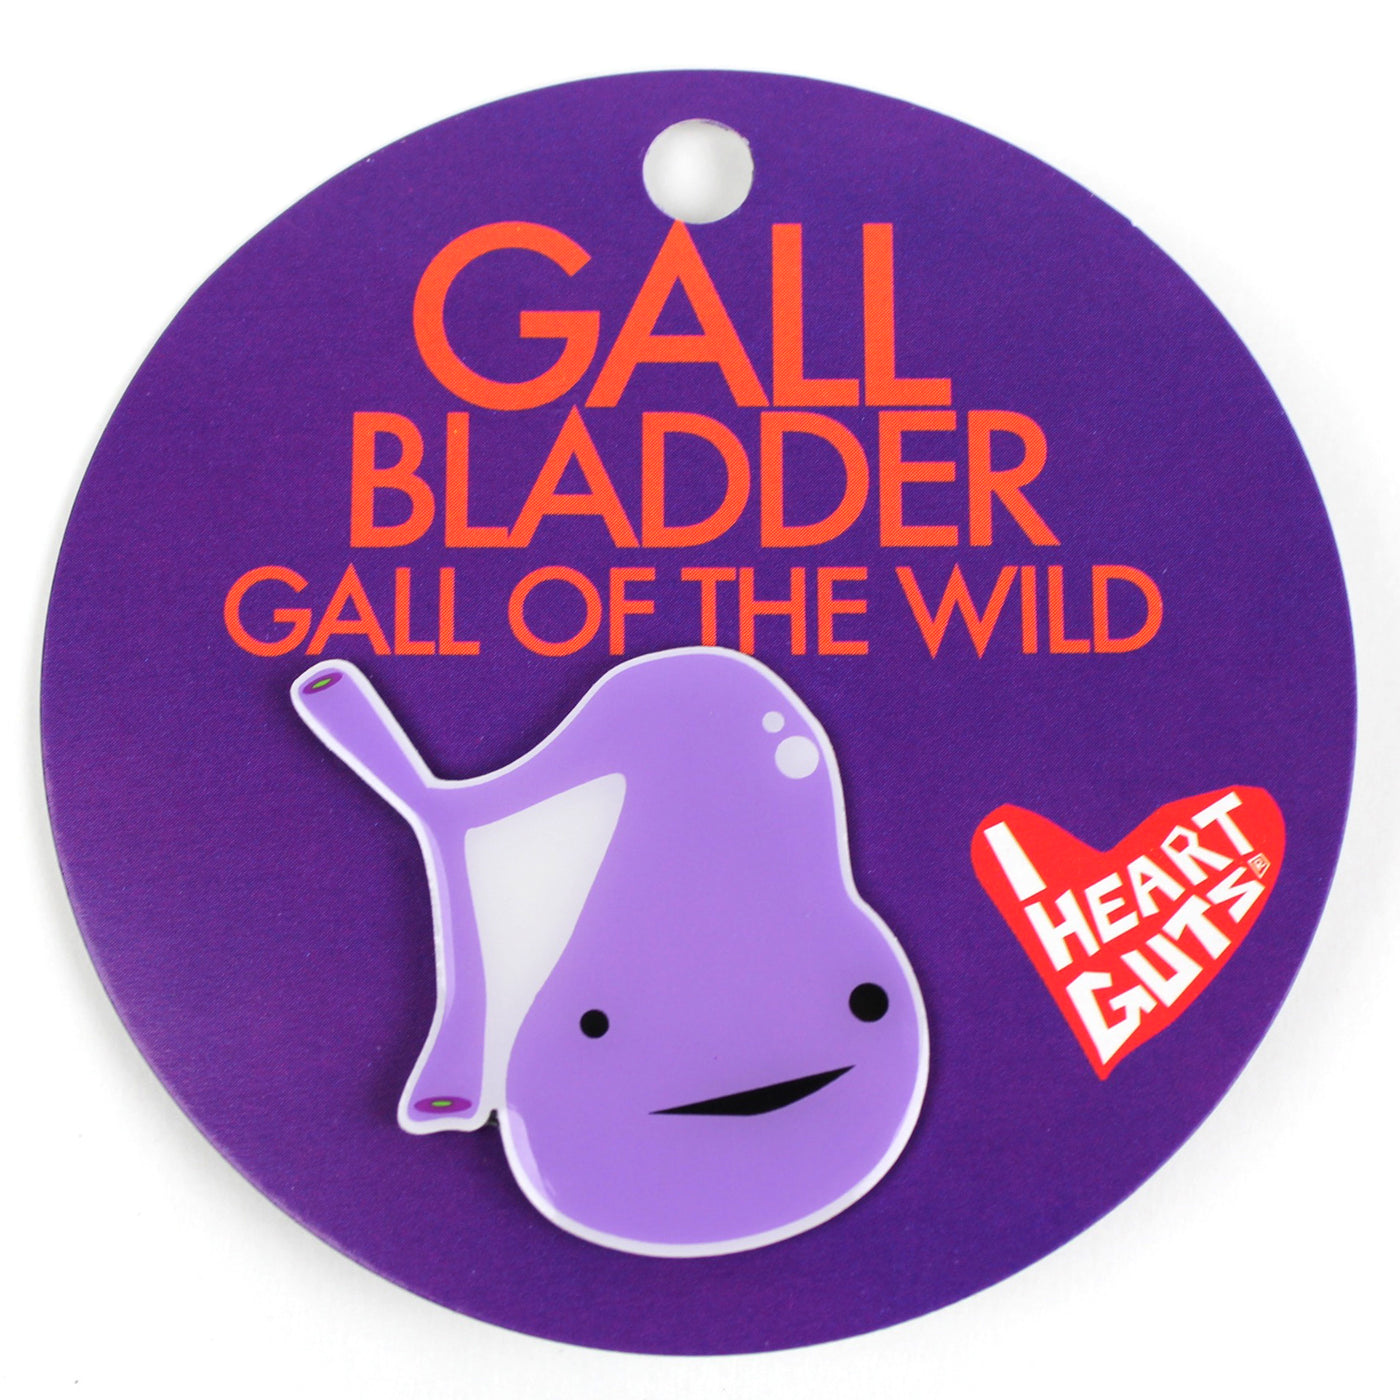 Gallbladder Pin - Cute Funny Gallbladder Pins - Gallbladder Surgery Pins & Gifts